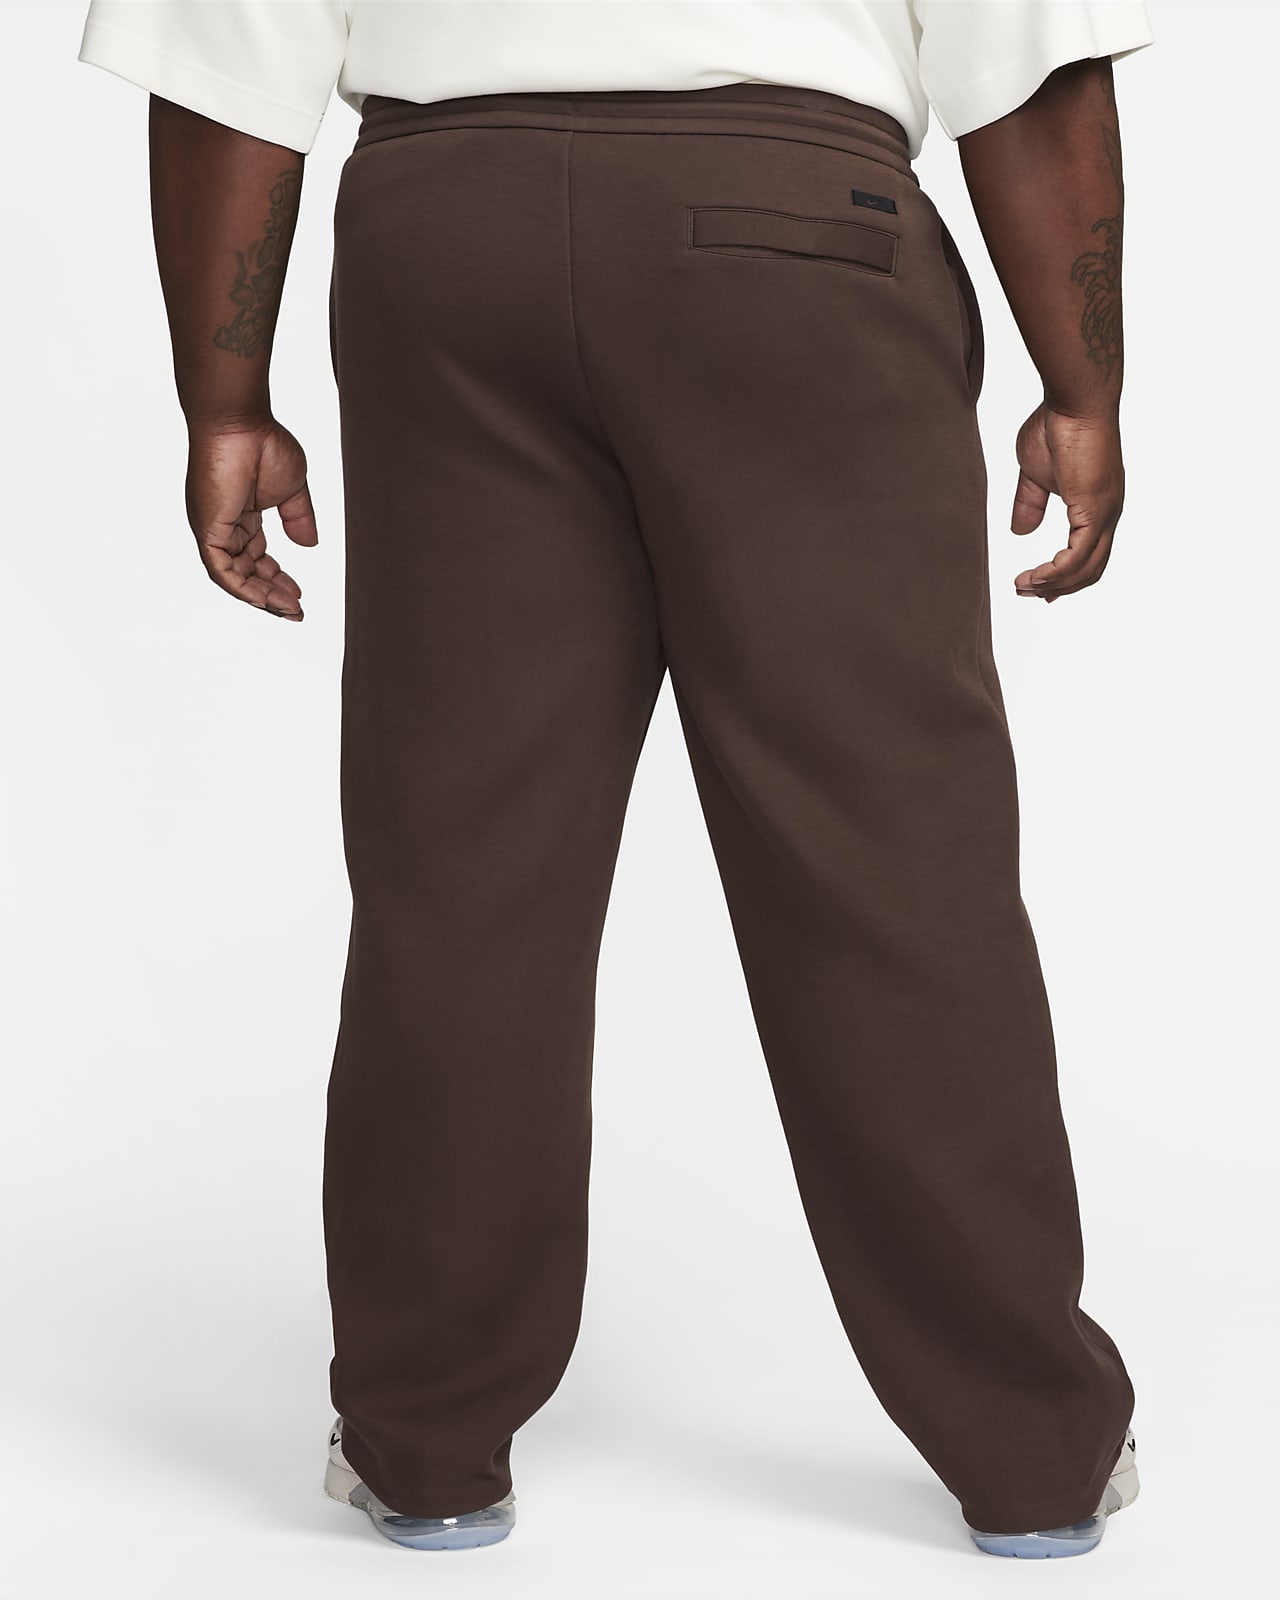 Nike Training pants SPORTSWEAR GYM VINTAGE in light brown